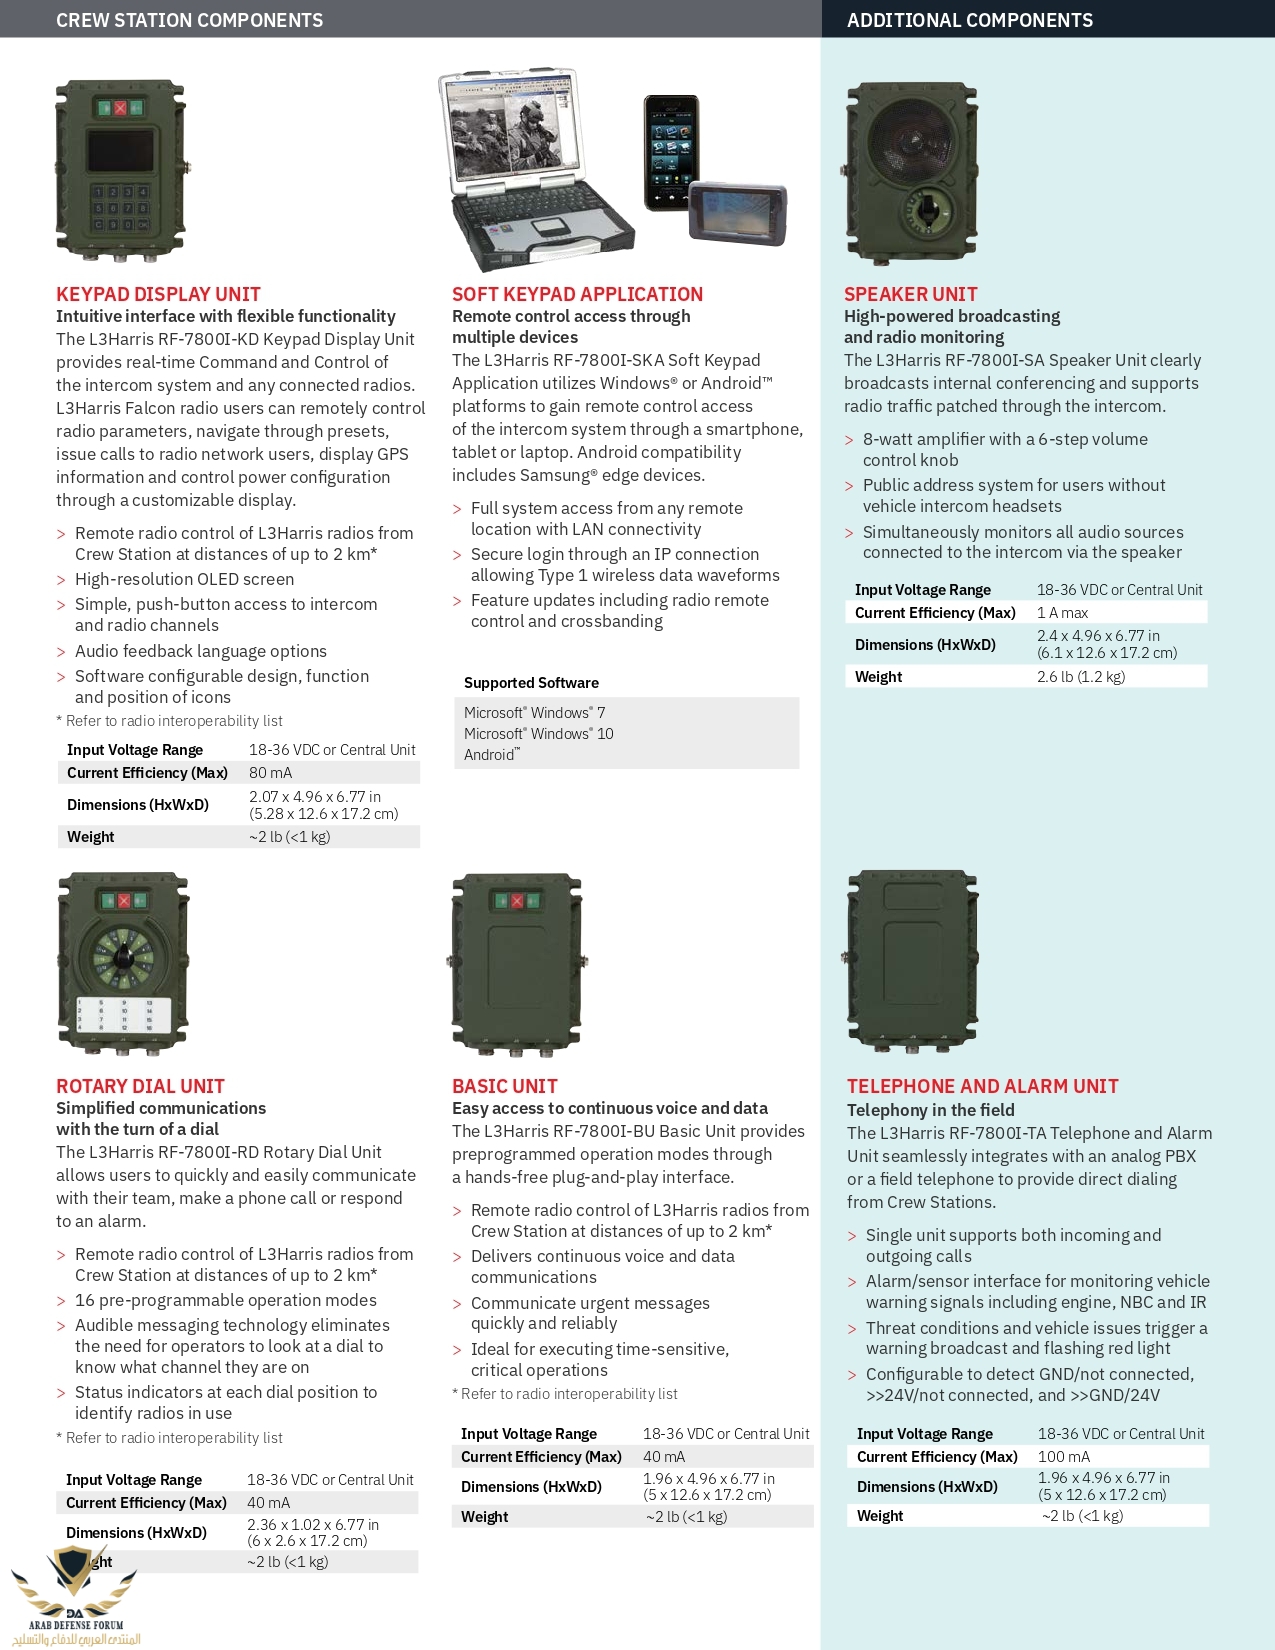 cs-tcom-rf-7800i-tactical-networking-intercom-brochure_2_page-0003.jpg